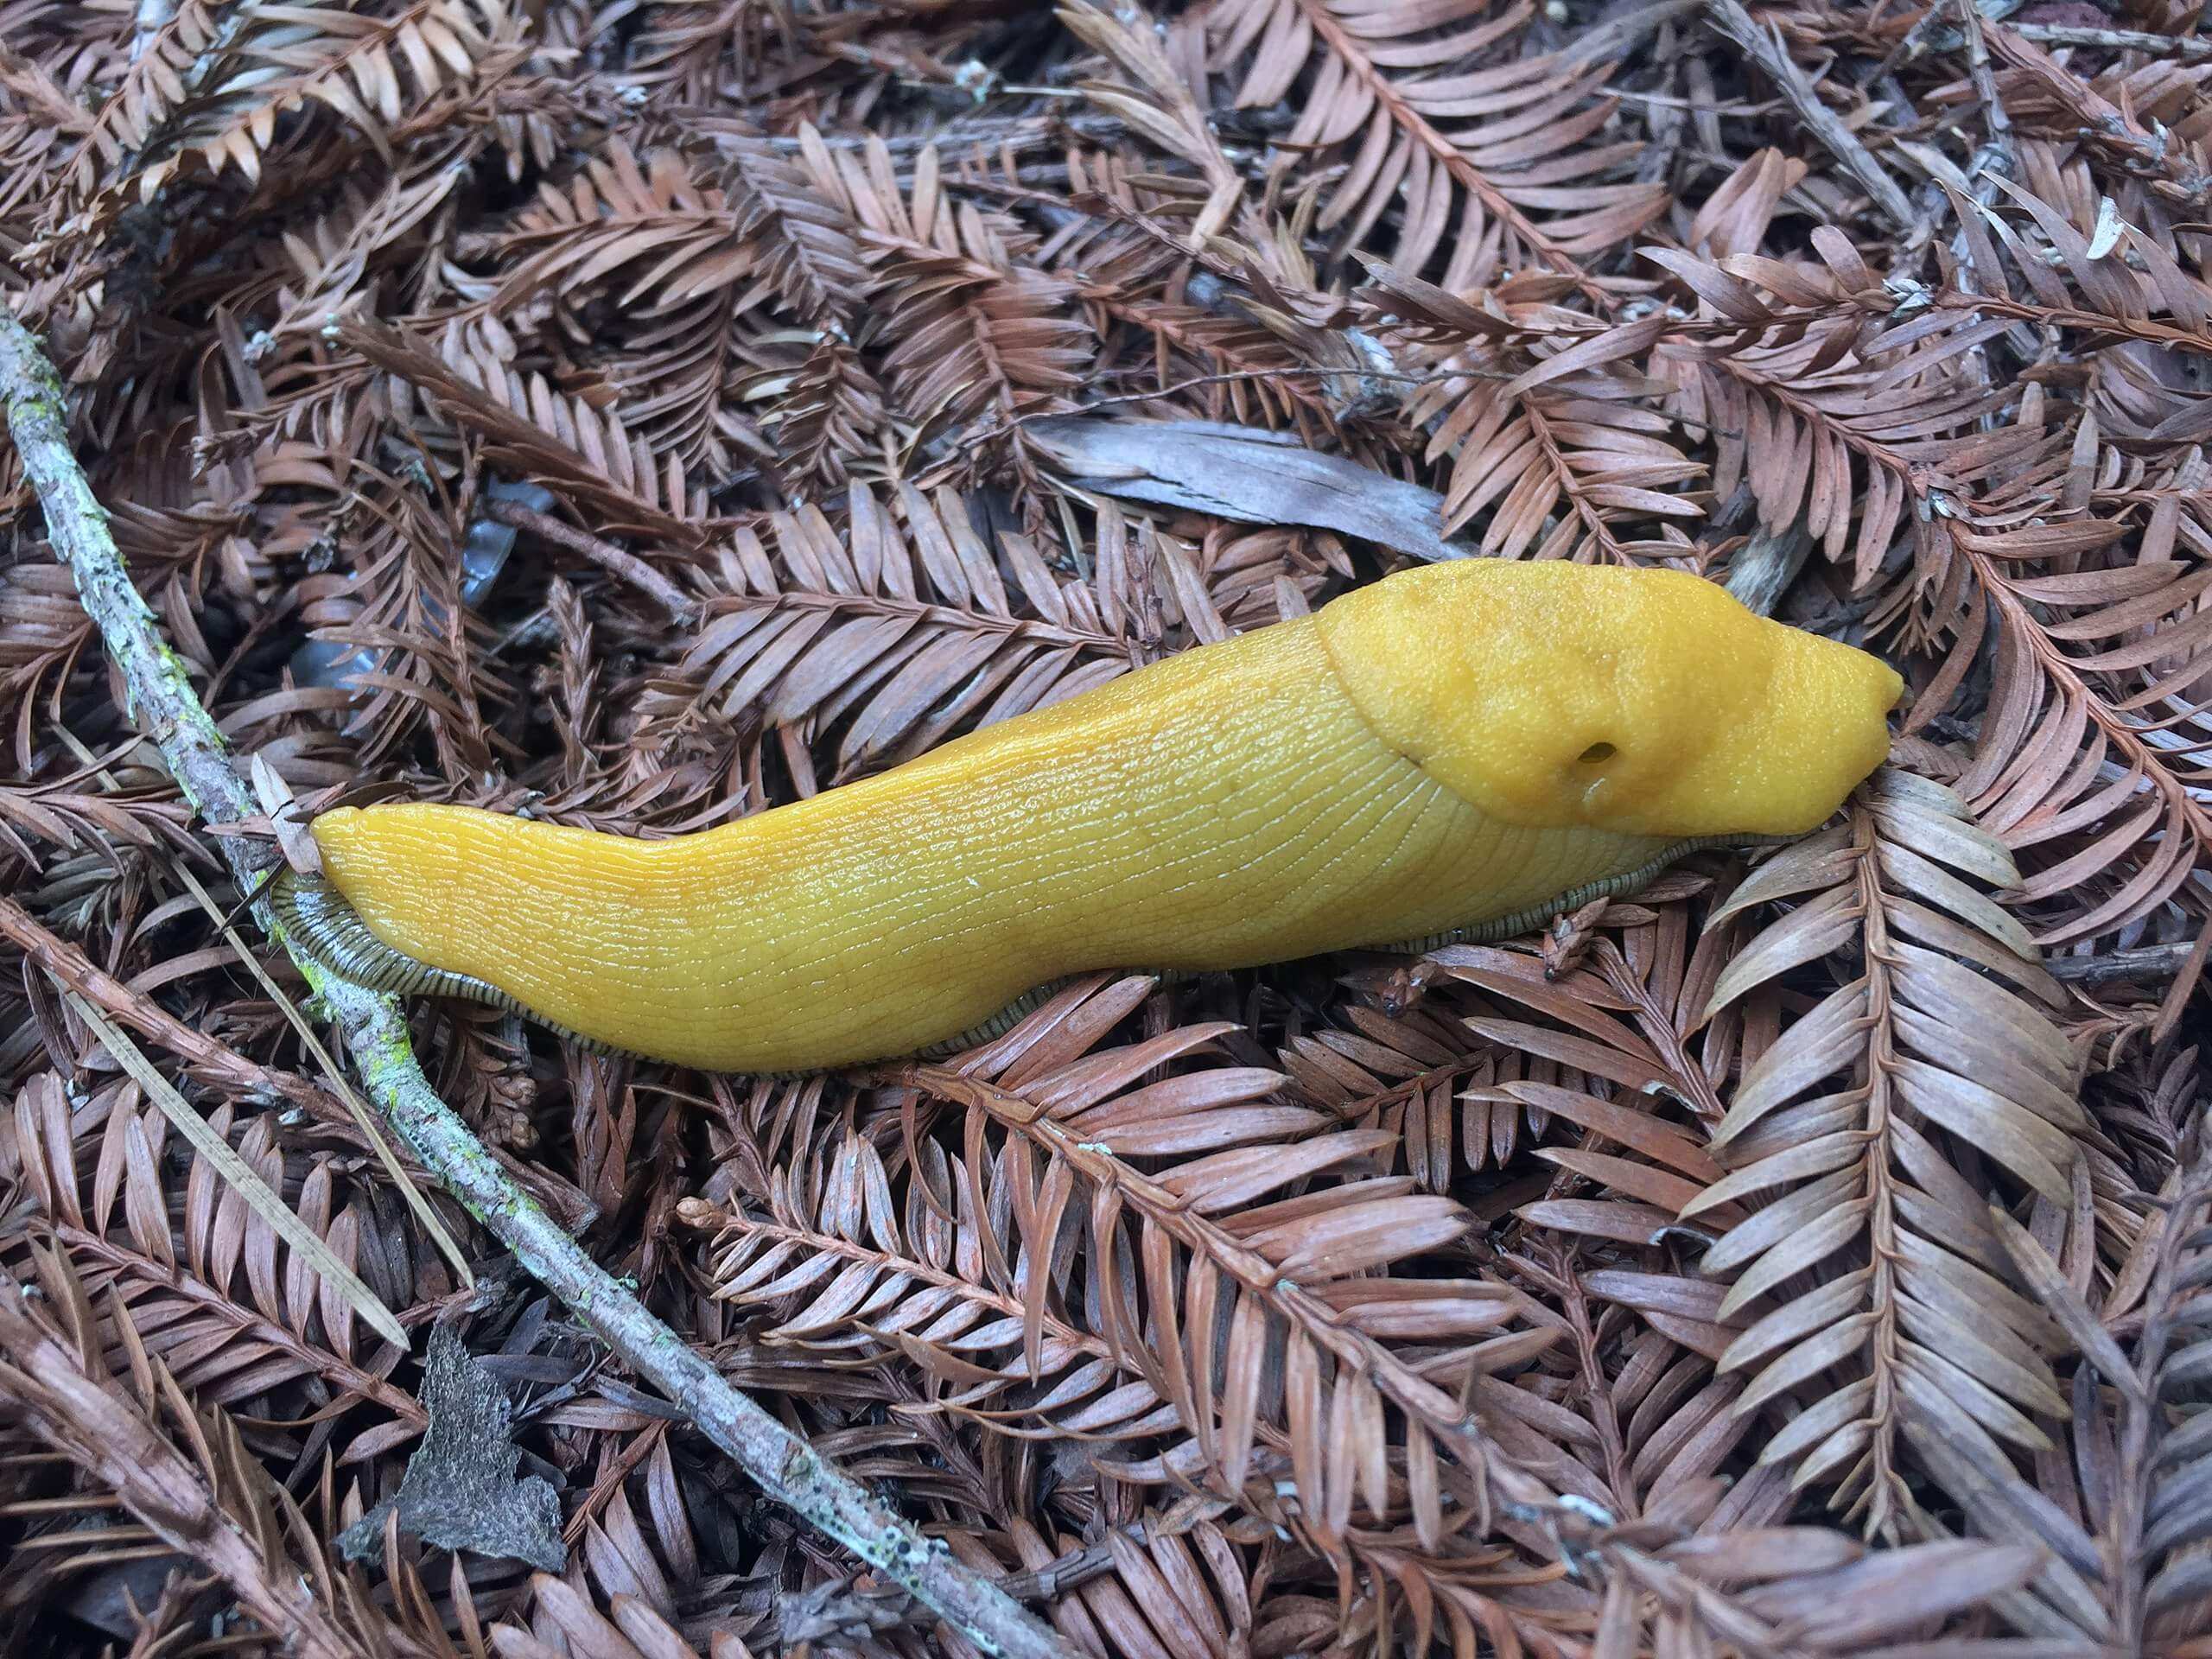 The California Banana Slug